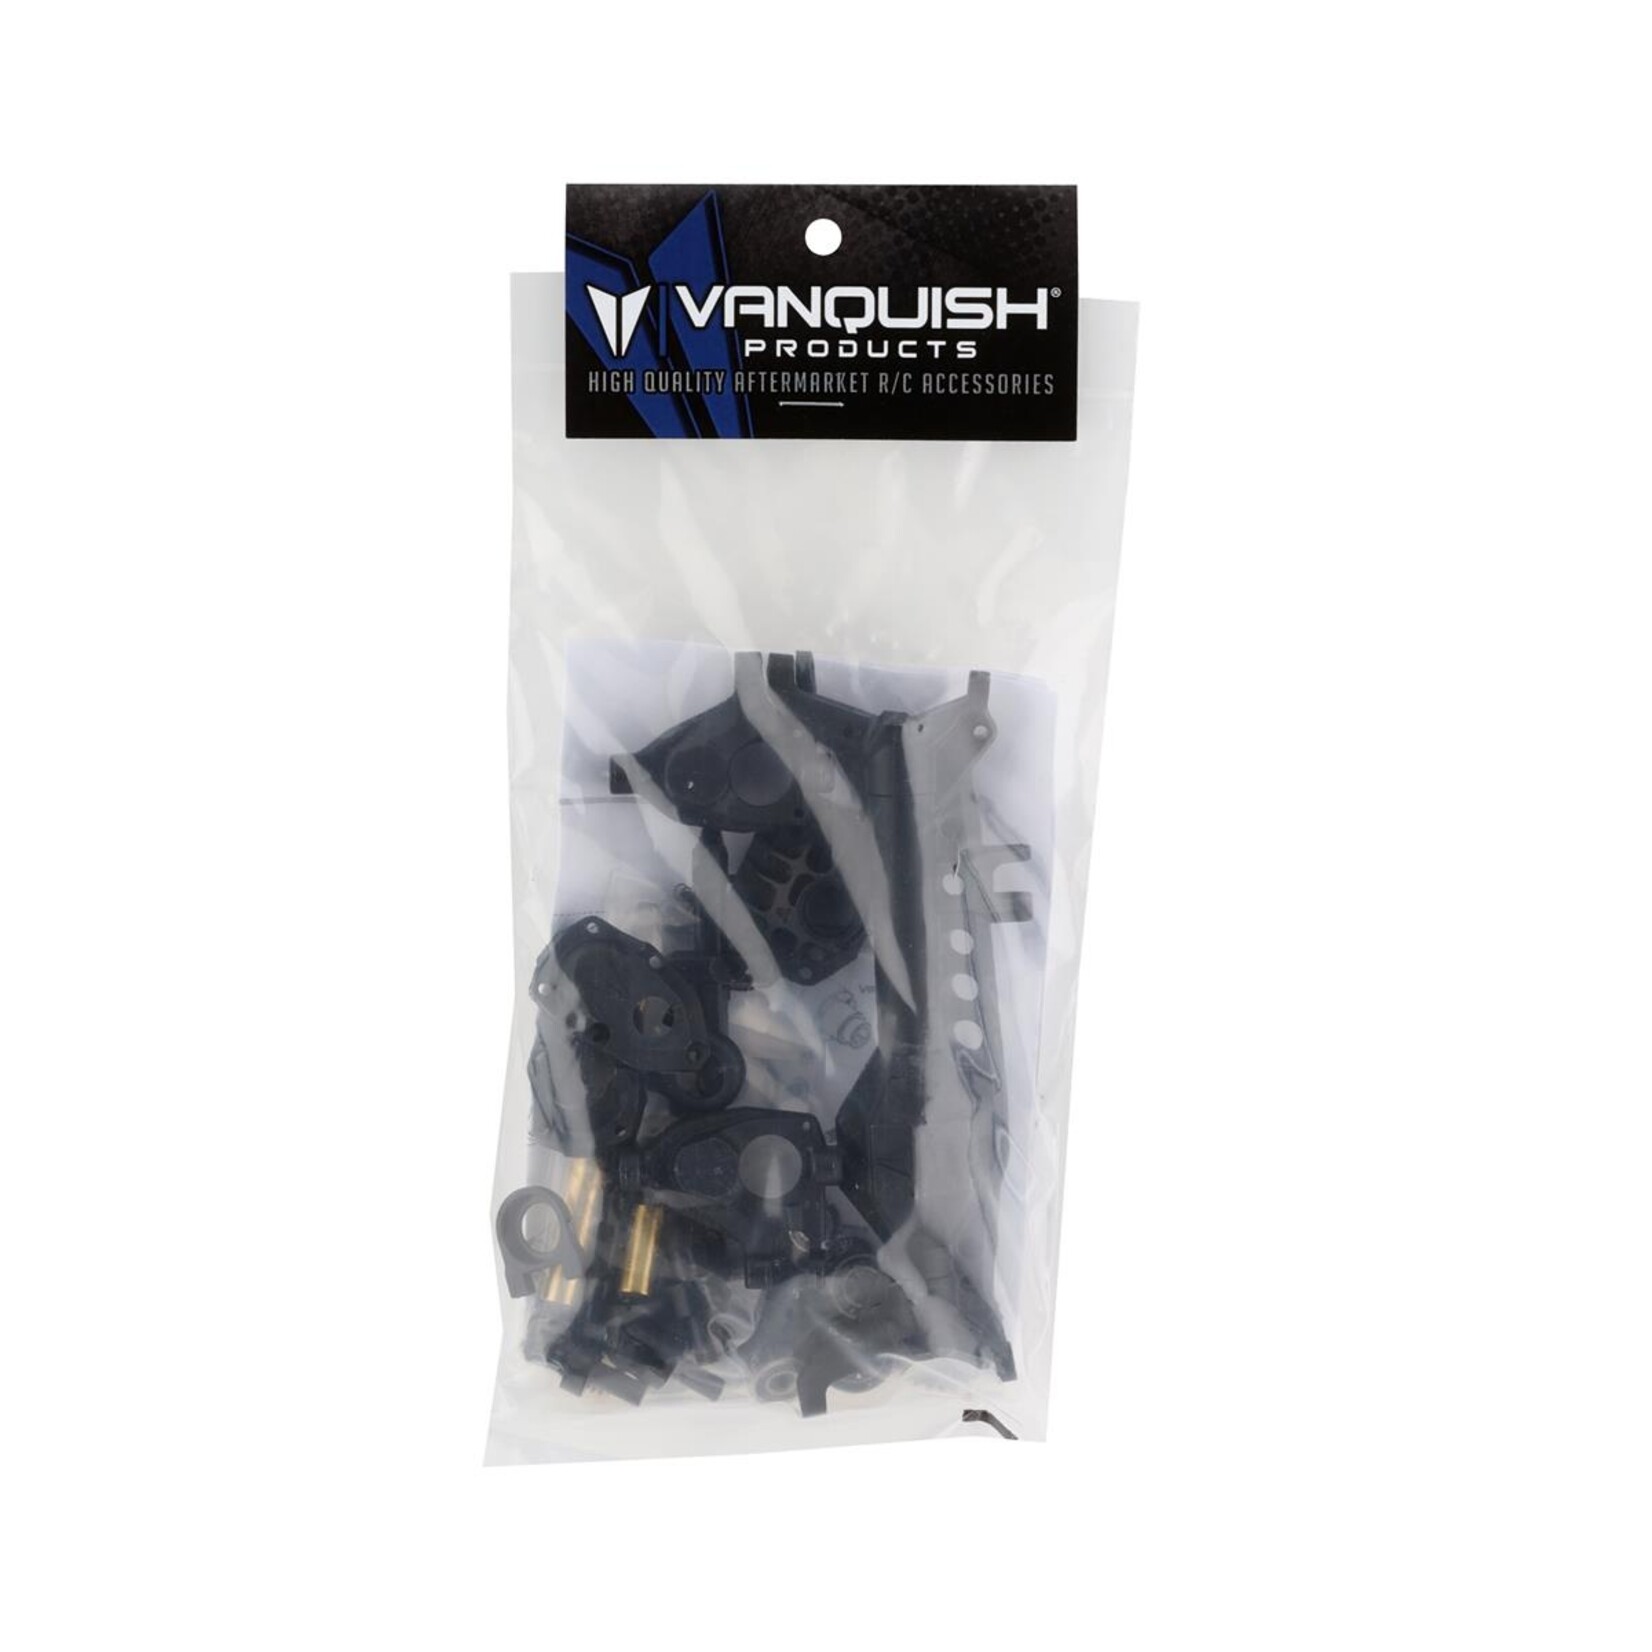 Vanquish Products Vanquish F10 Portal Front Axle Set #VPS08600